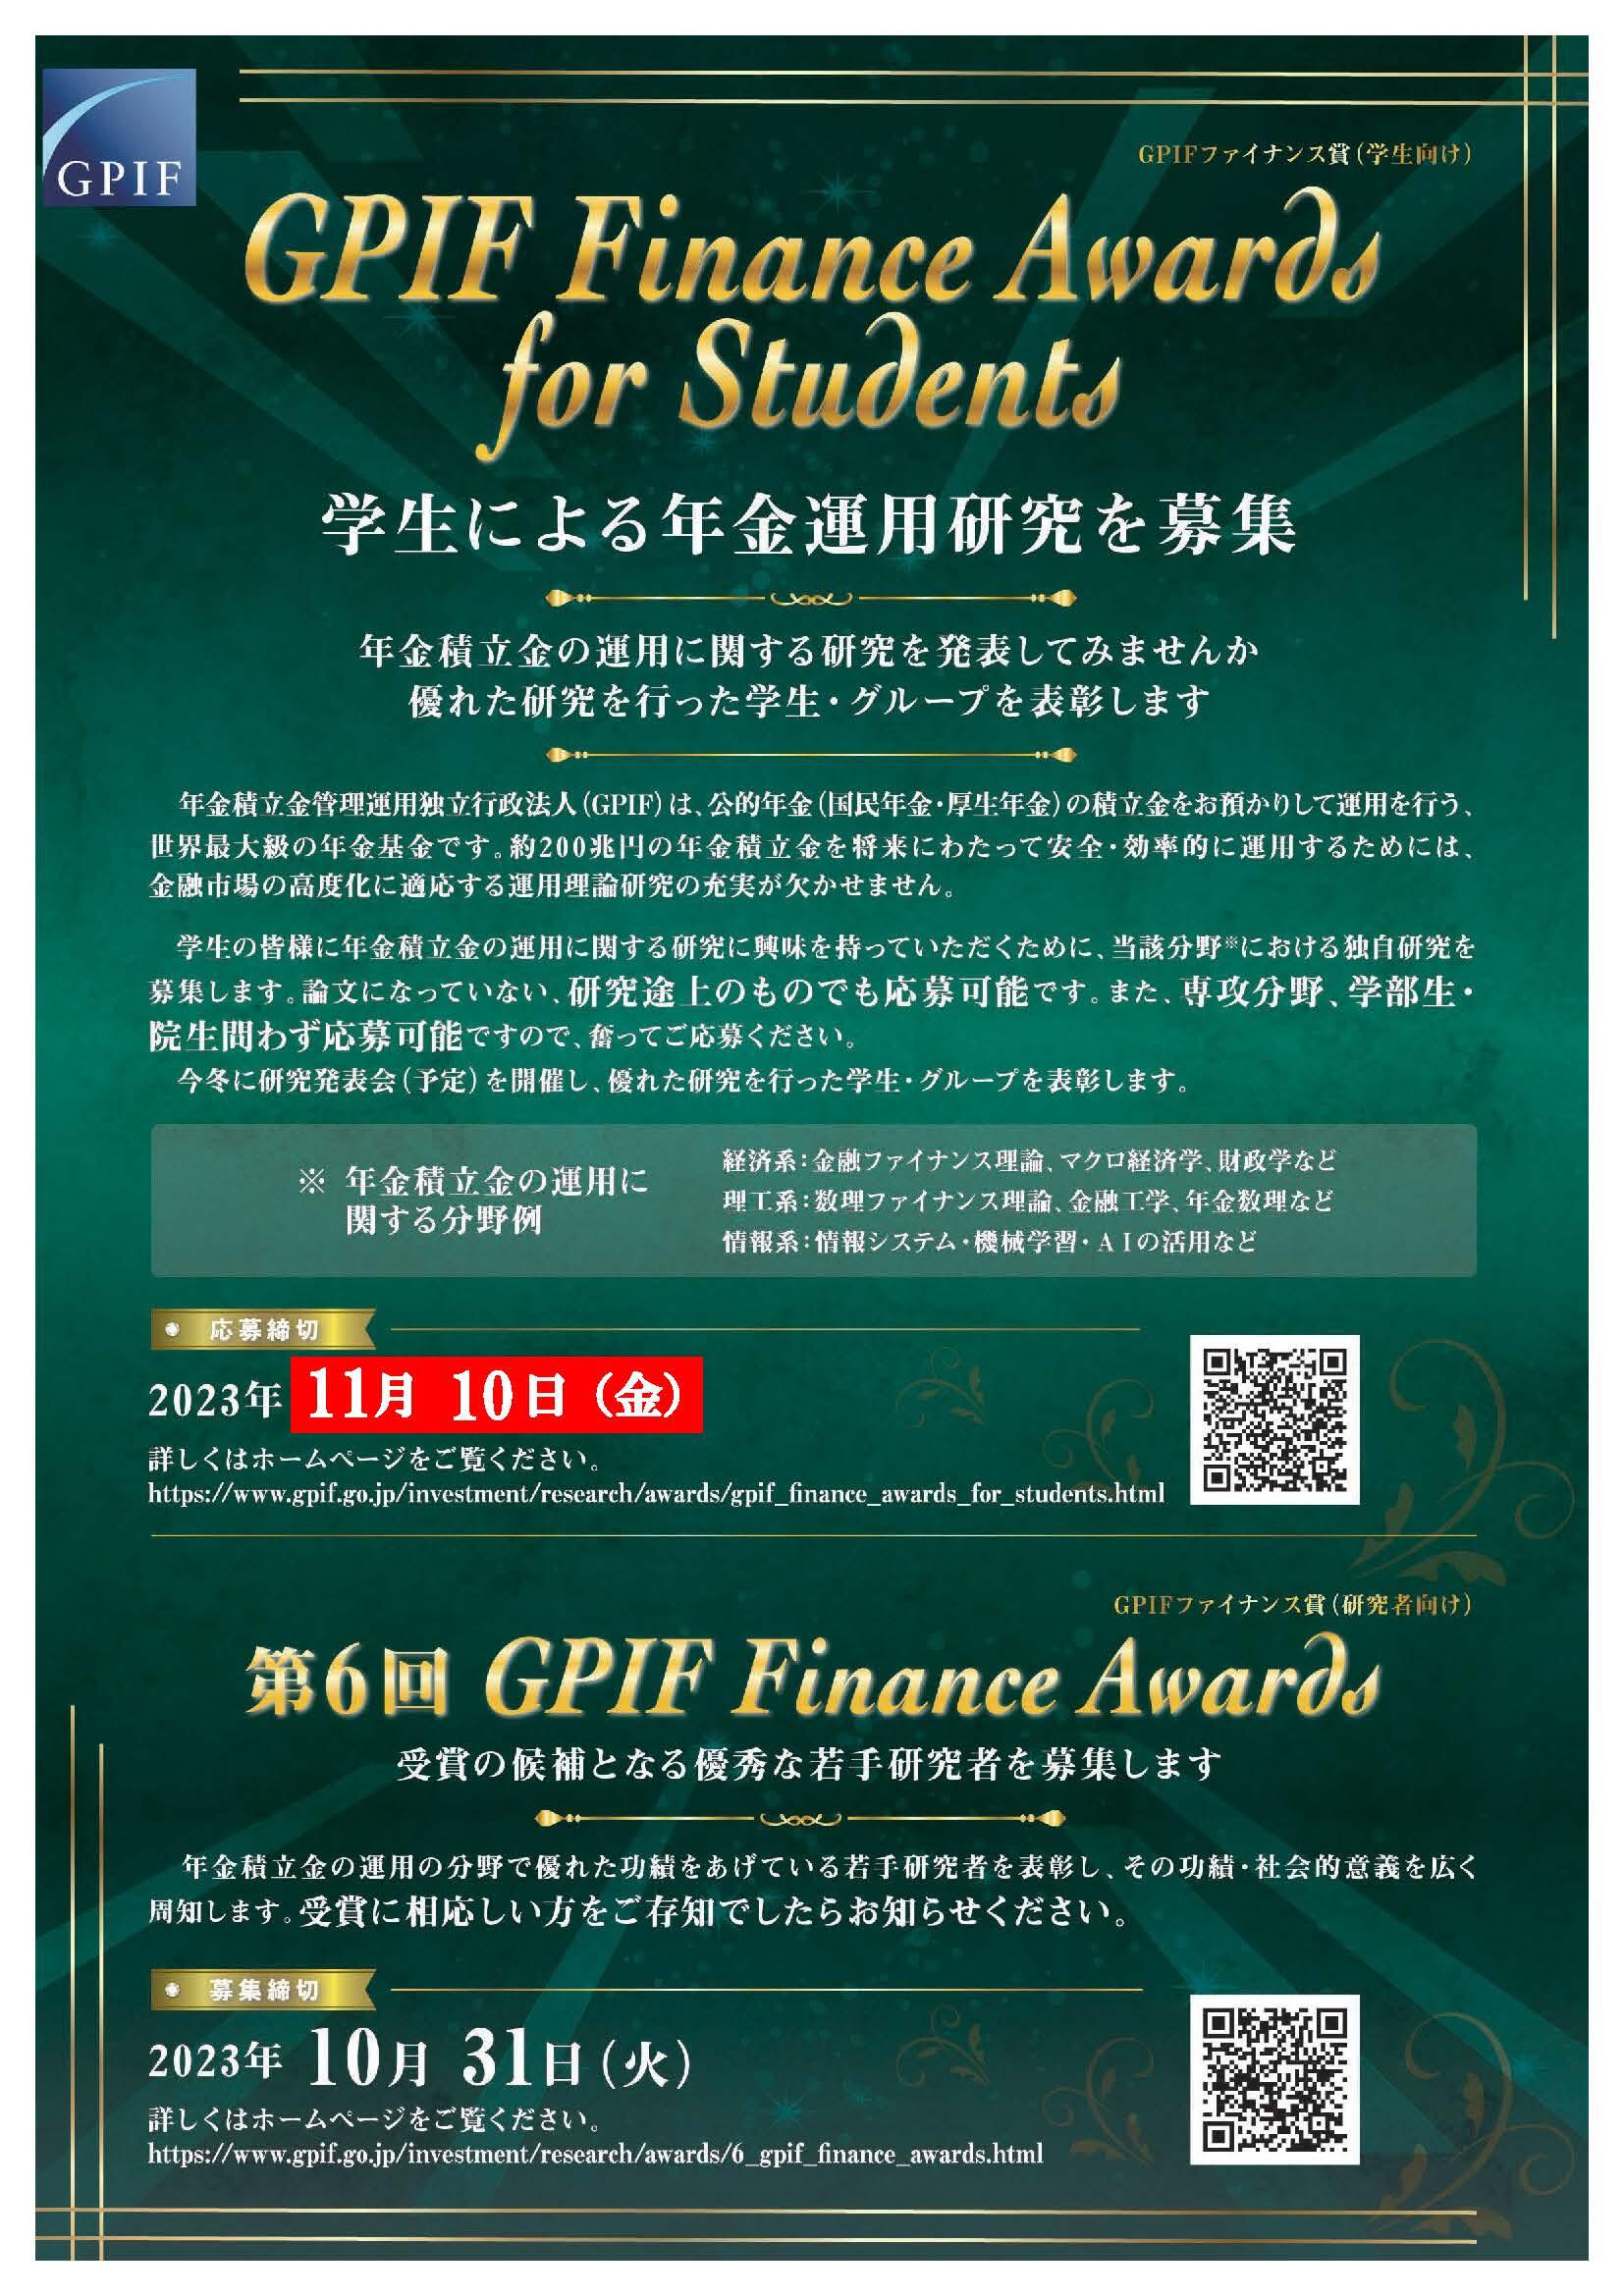 GPIF_Finance_Awards1110.jpg